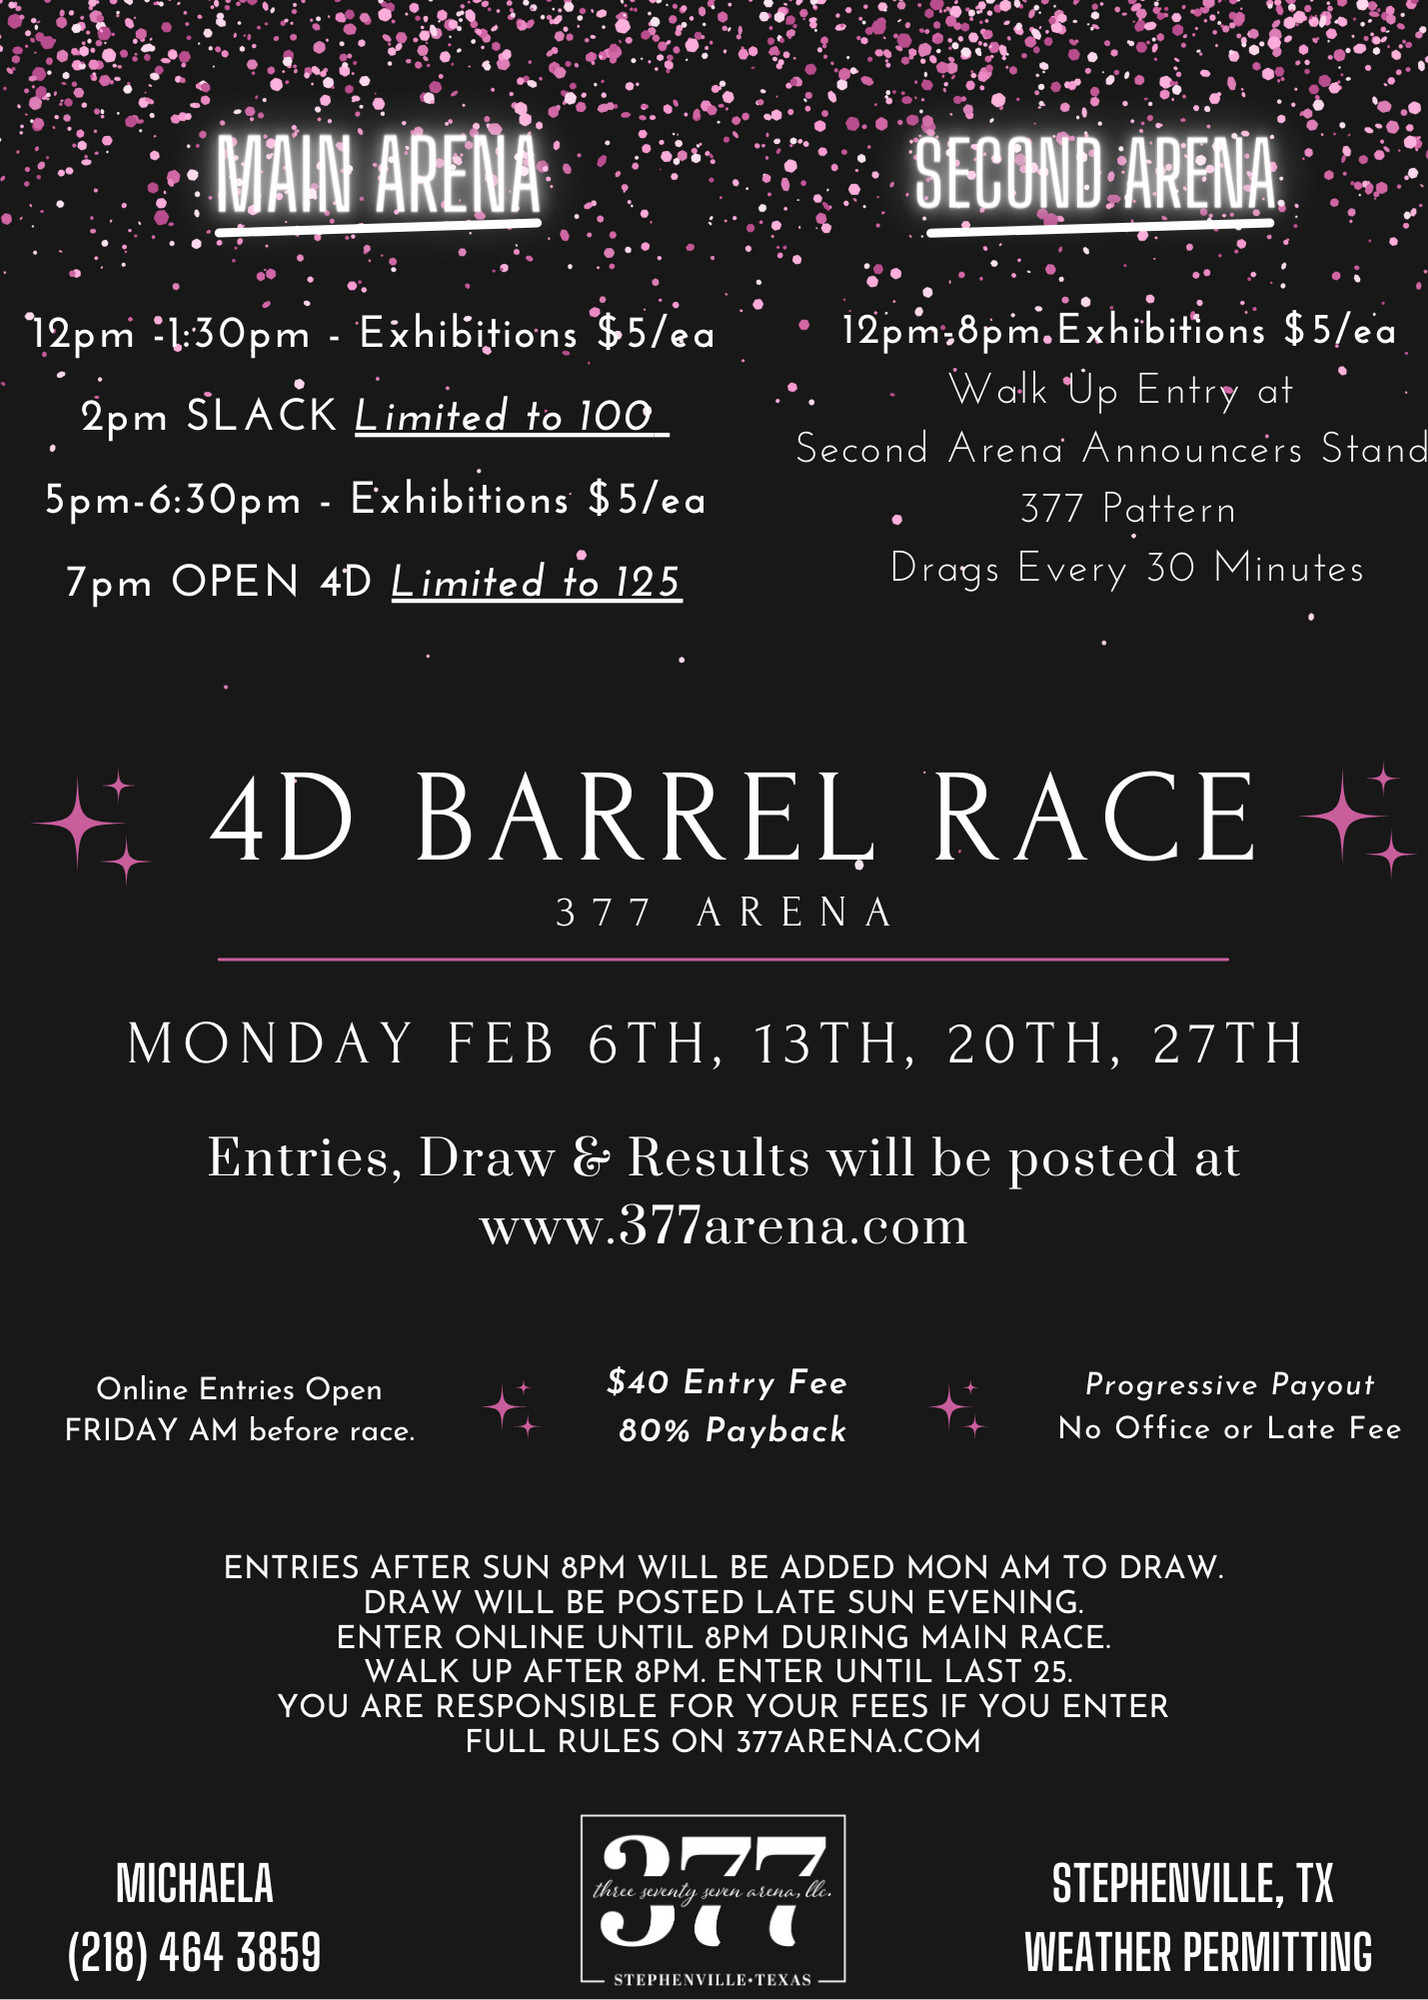 Open 4D Barrel Race | 2nd Arena Exhibitions 12-8pm